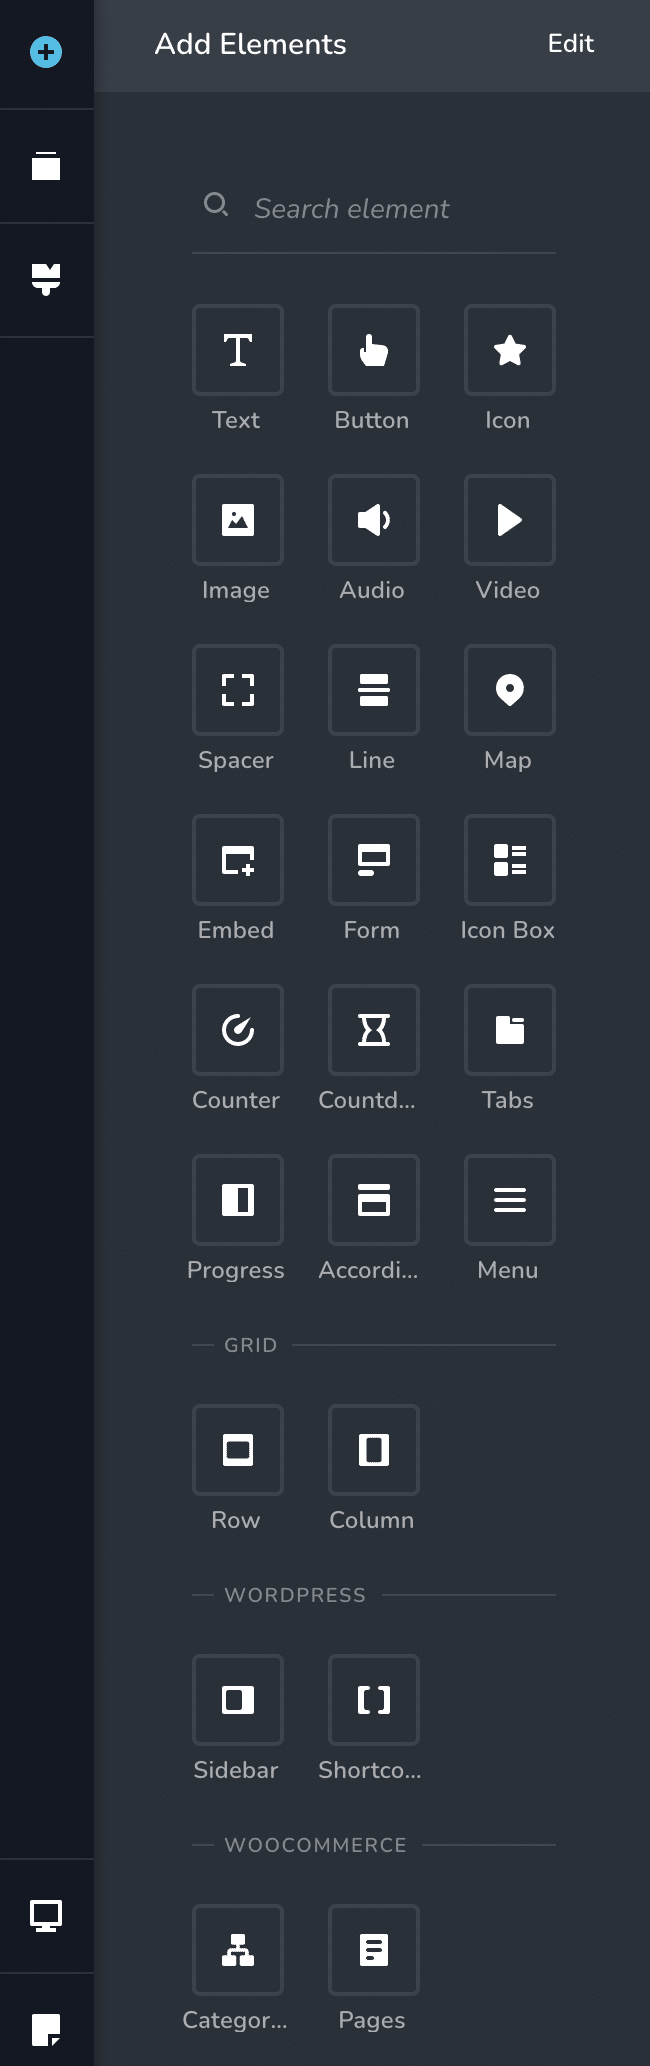 Brizy page builder elements: text, button, icon, image, form, etc.